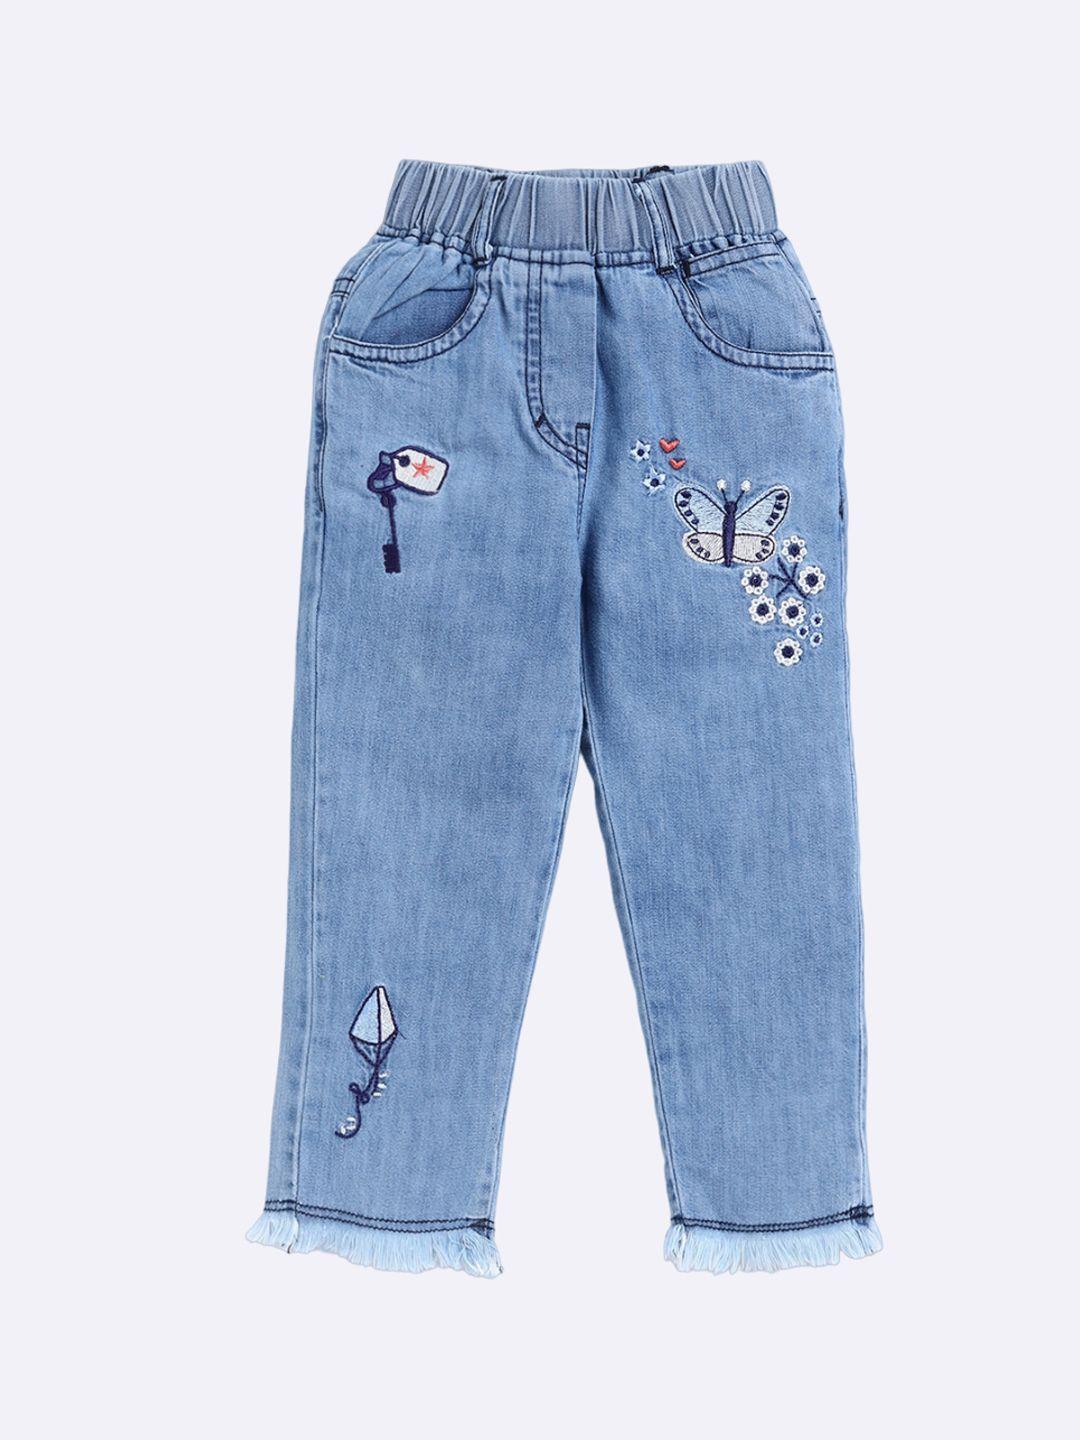 denikid unisex kids embrodered light fade pure cotton jeans